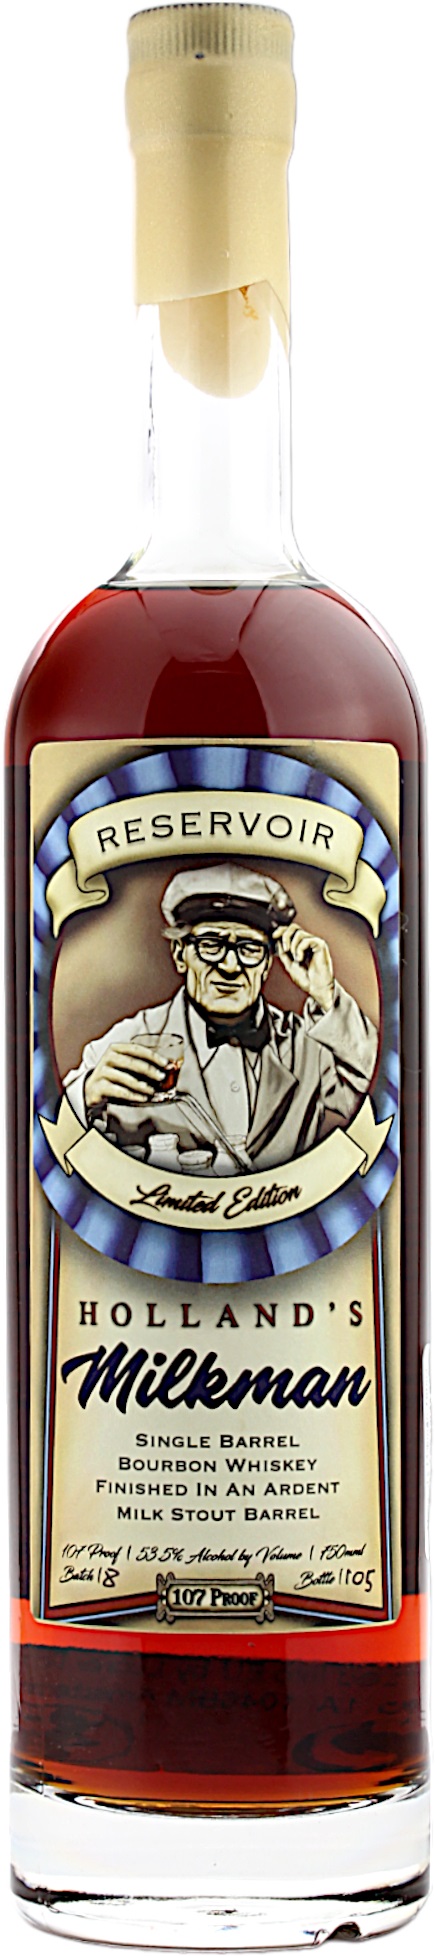 Reservoir Holland's Milkman Batch 8 Bourbon Whiskey 53.5% 0,7l